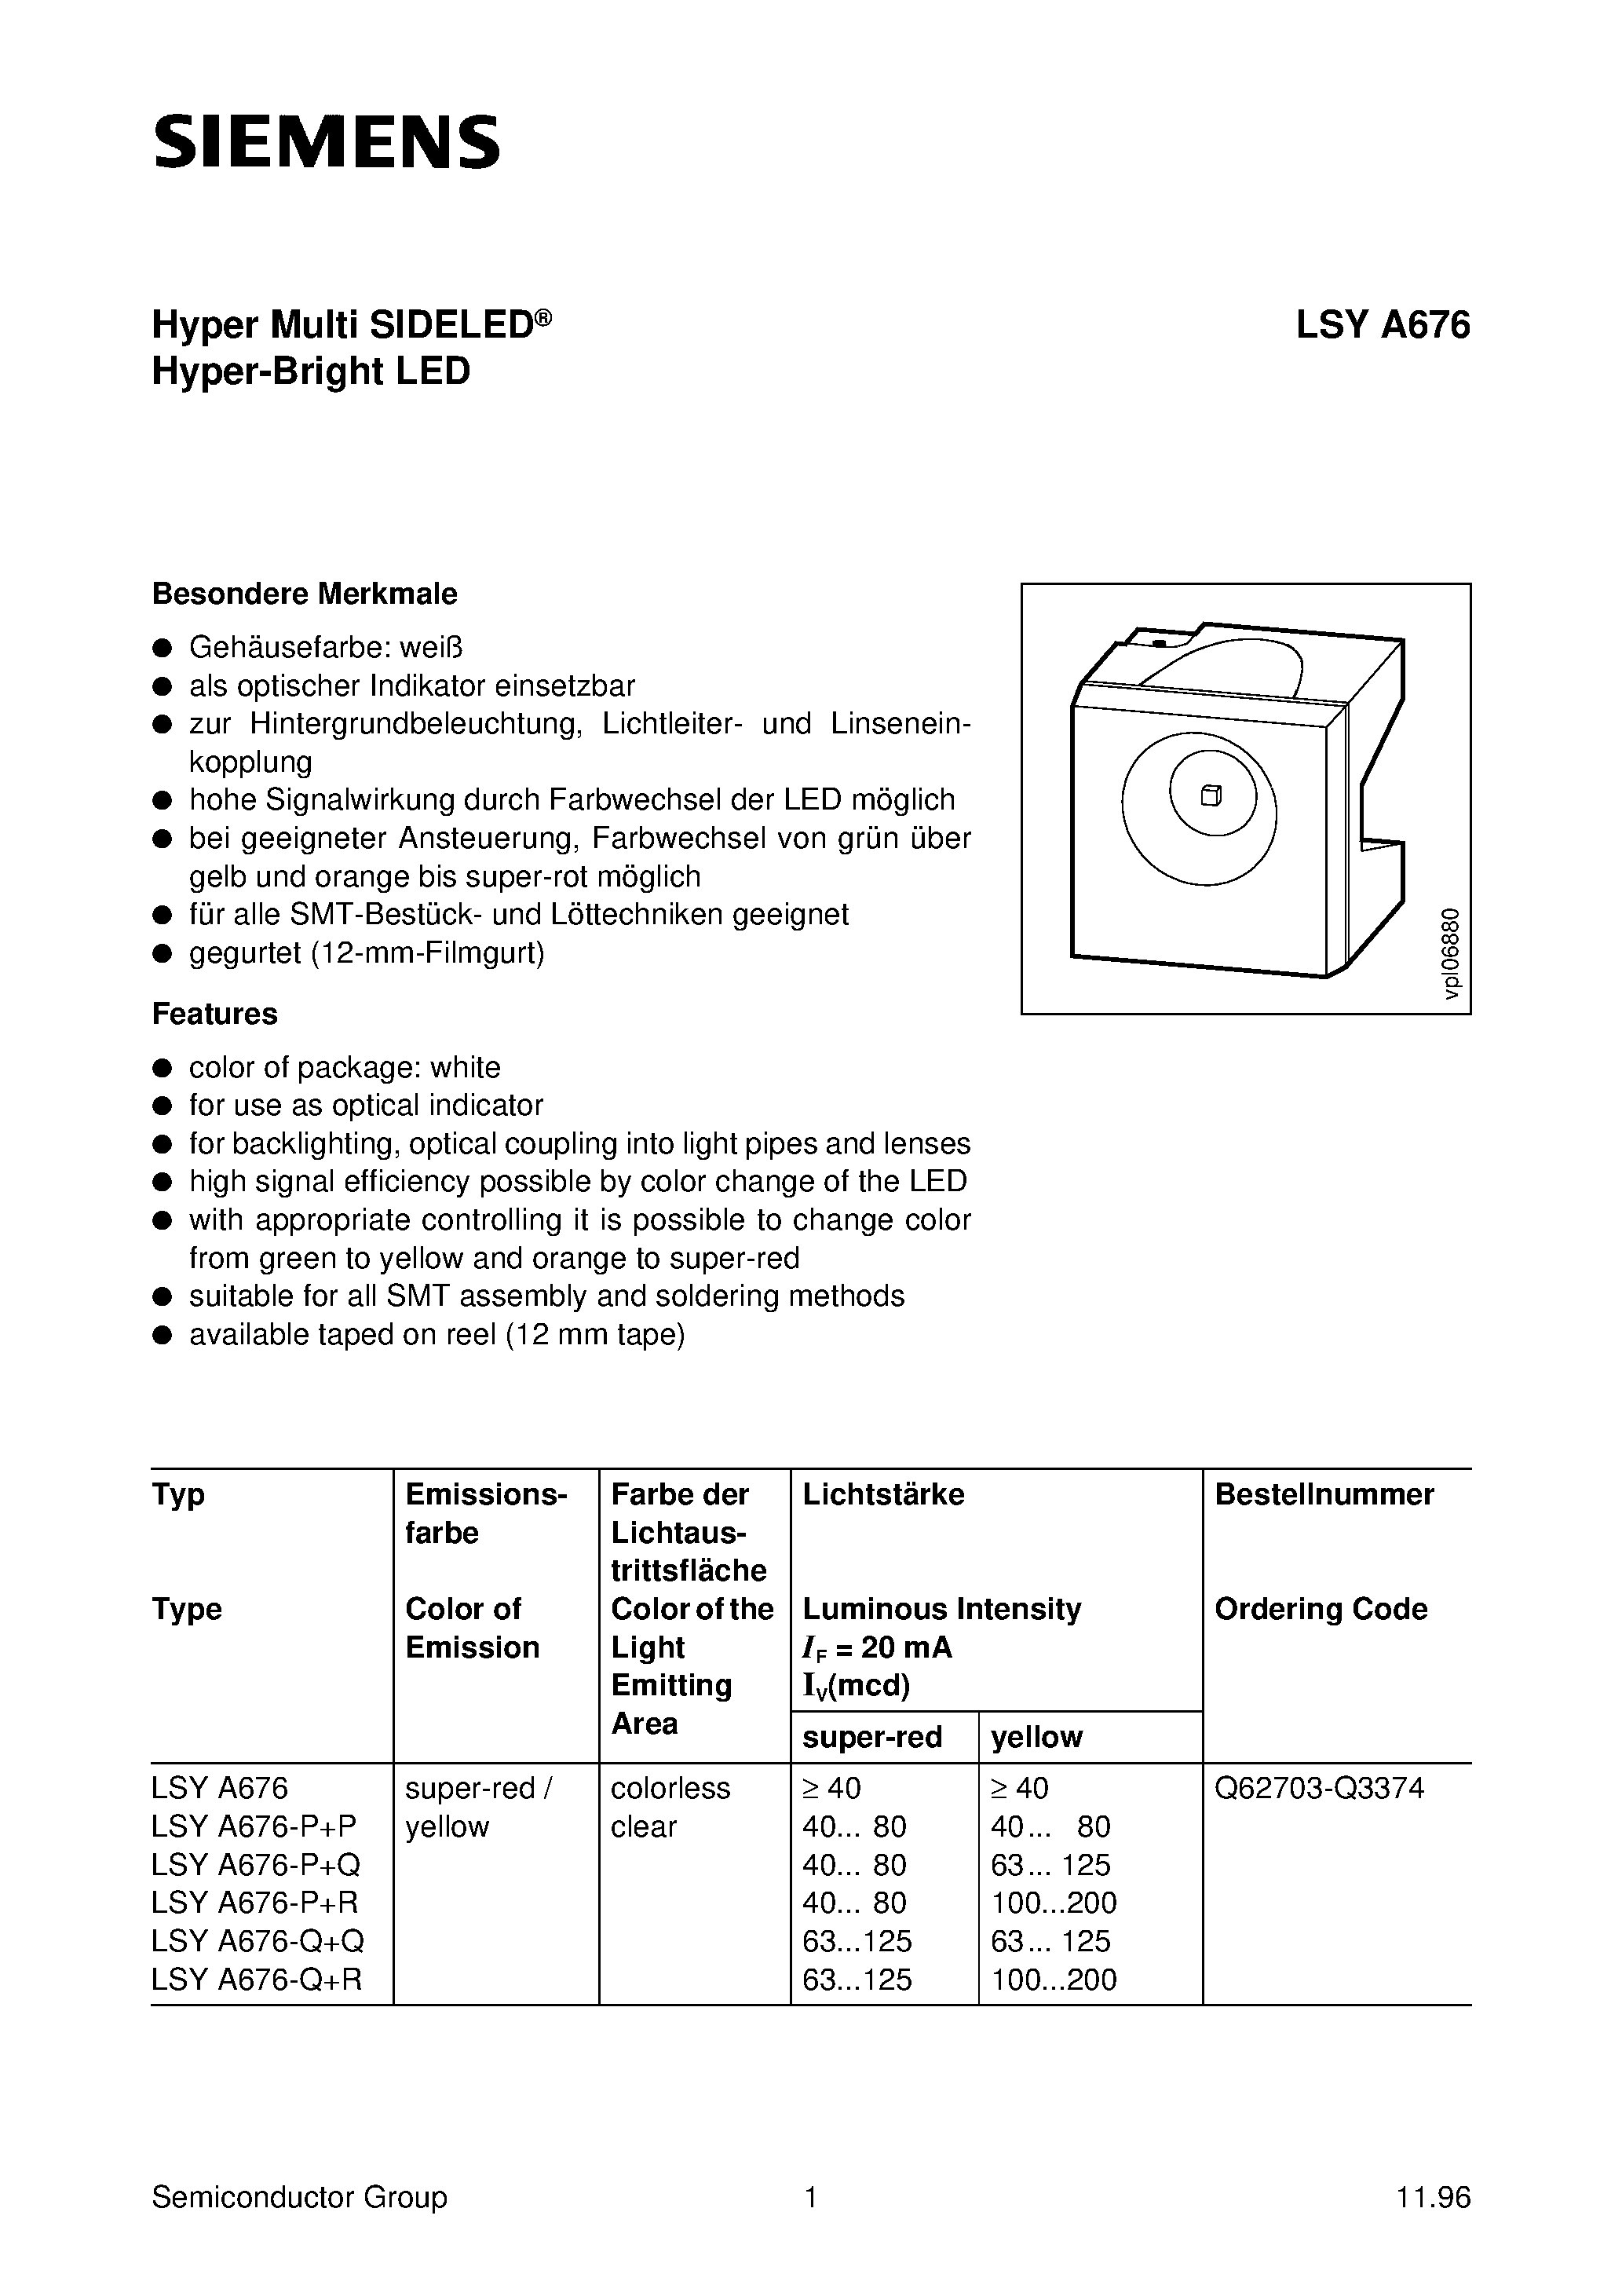 Datasheet LSYA676-Q+Q - Hyper Multi SIDELED Hyper-Bright LED page 1